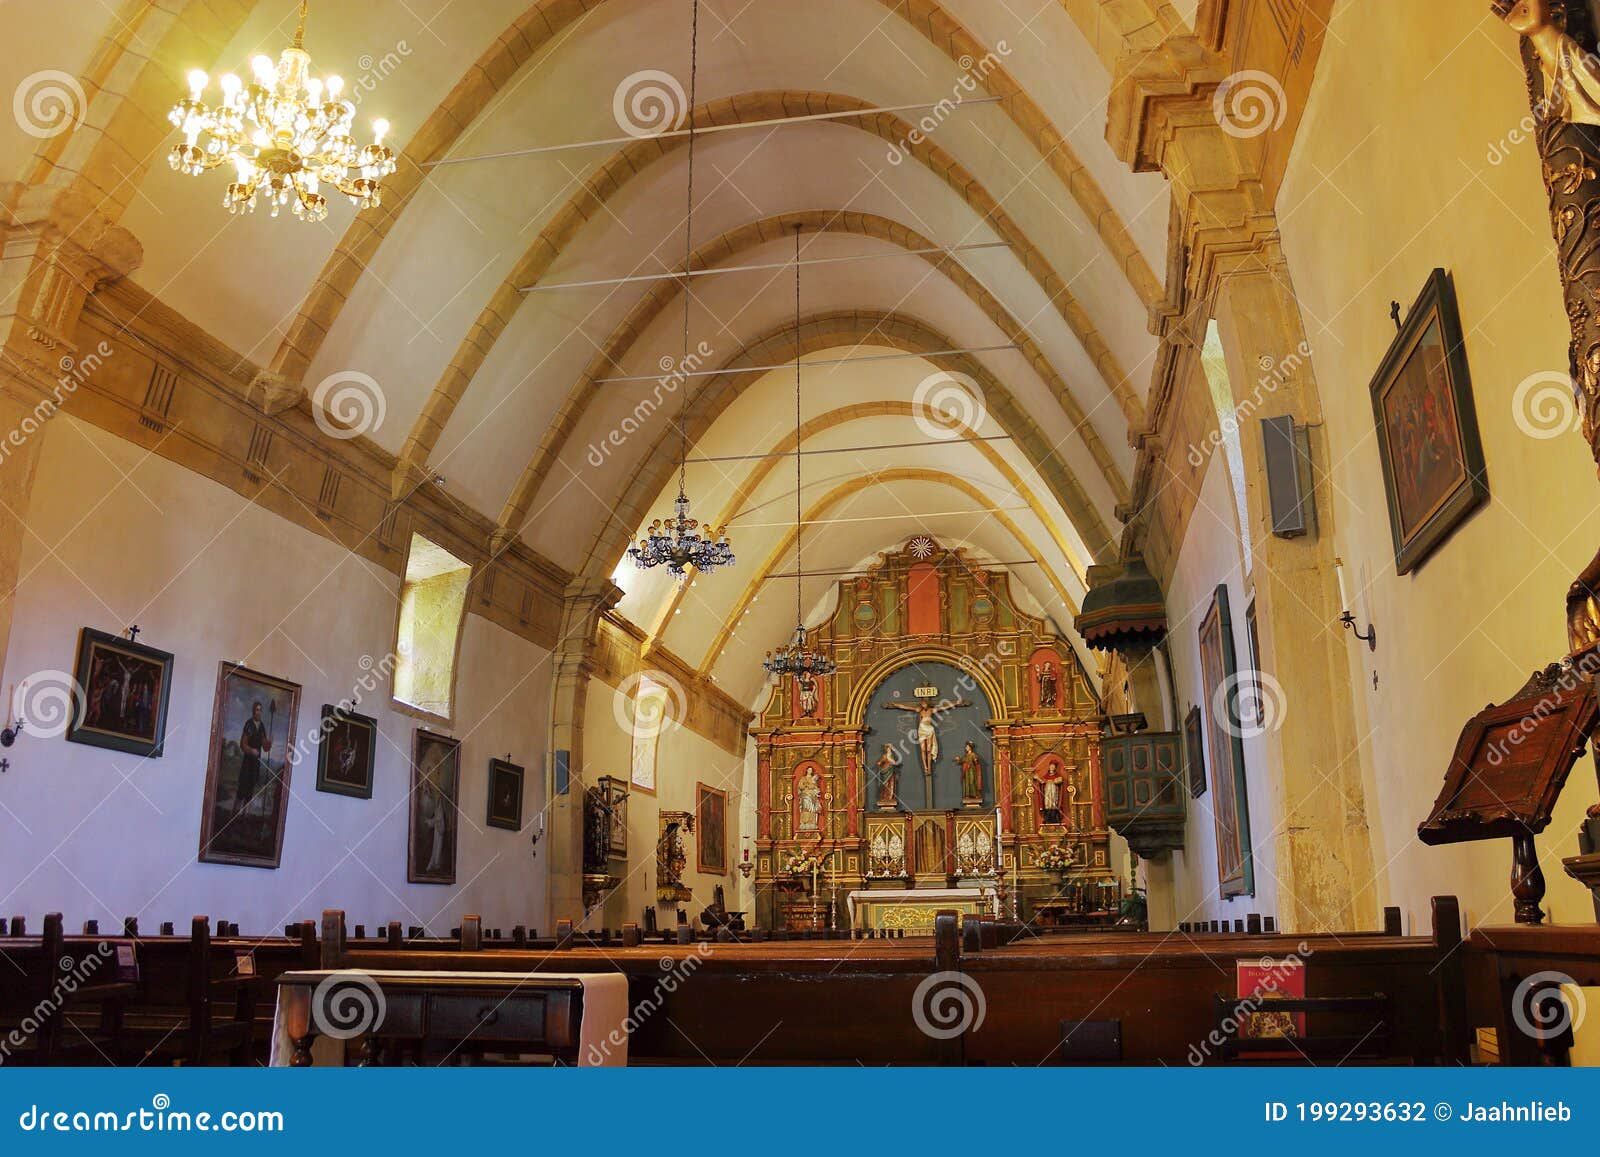 nave of historic spanish mission church at carmel, big sur, california